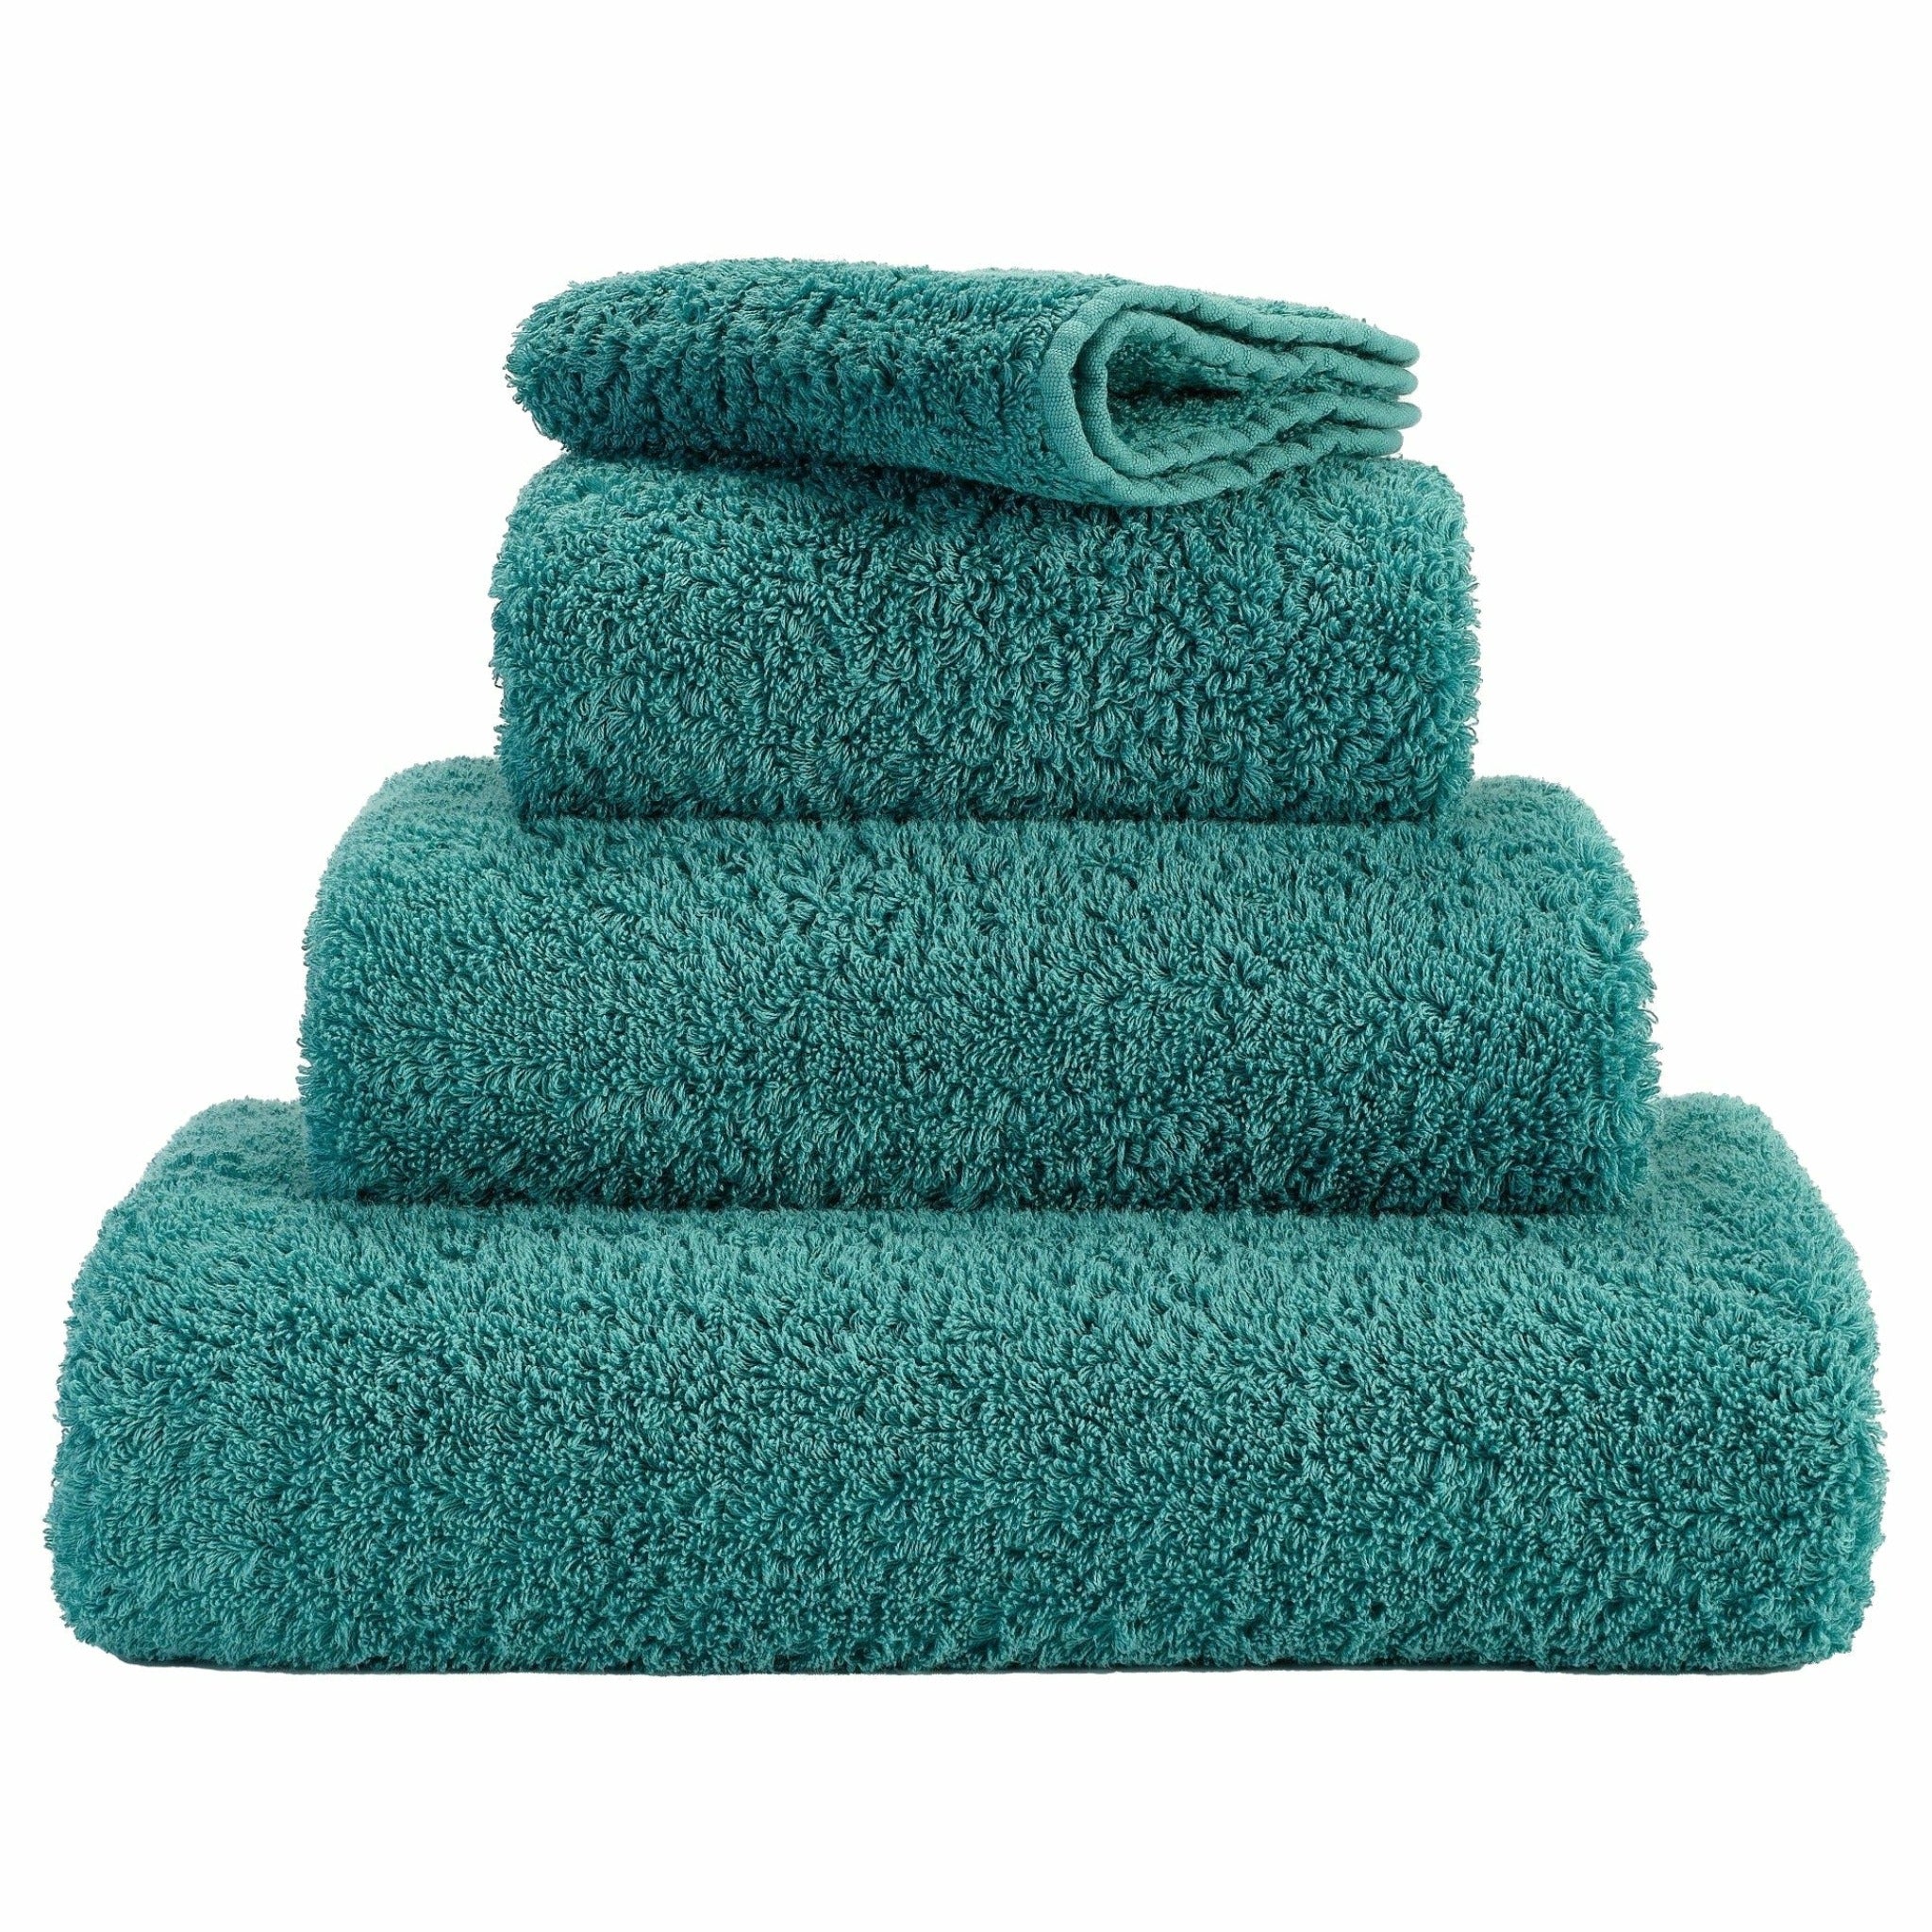 Abyss Super Pile Bath Towels & Mats - Dragonfly | Fine Linen & Bath